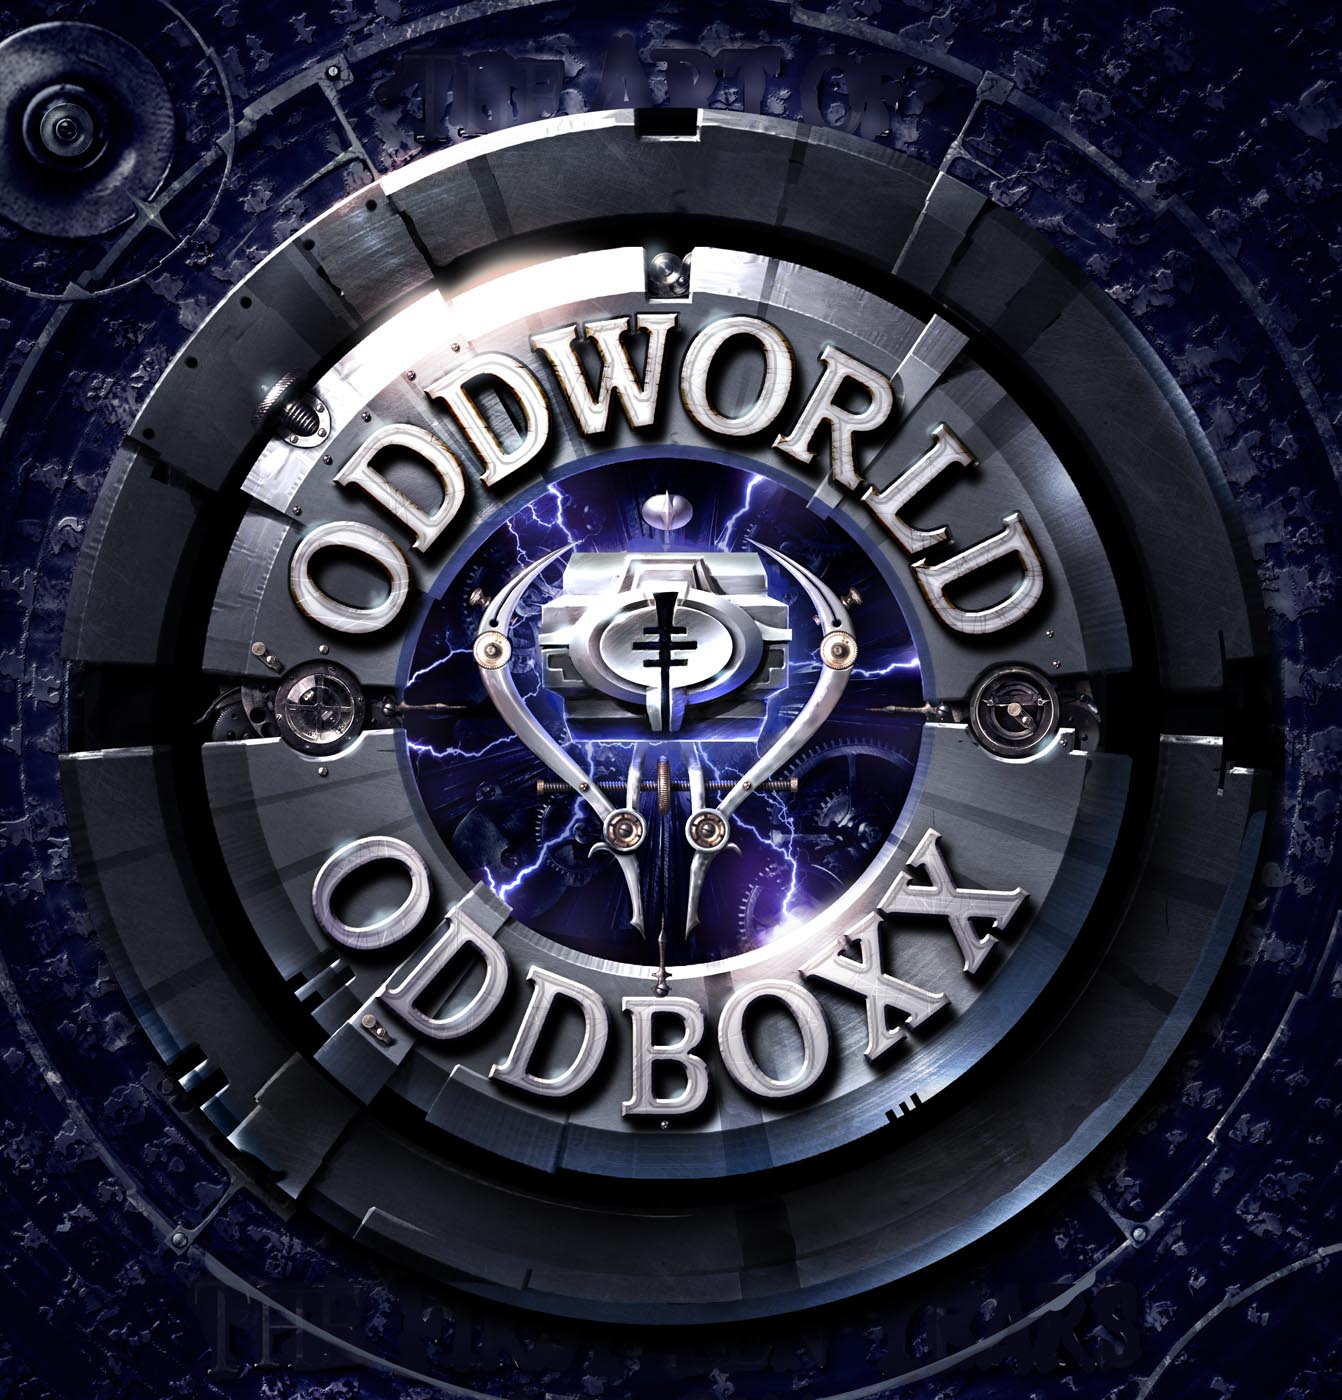 Oddworld The Oddboxx Pch